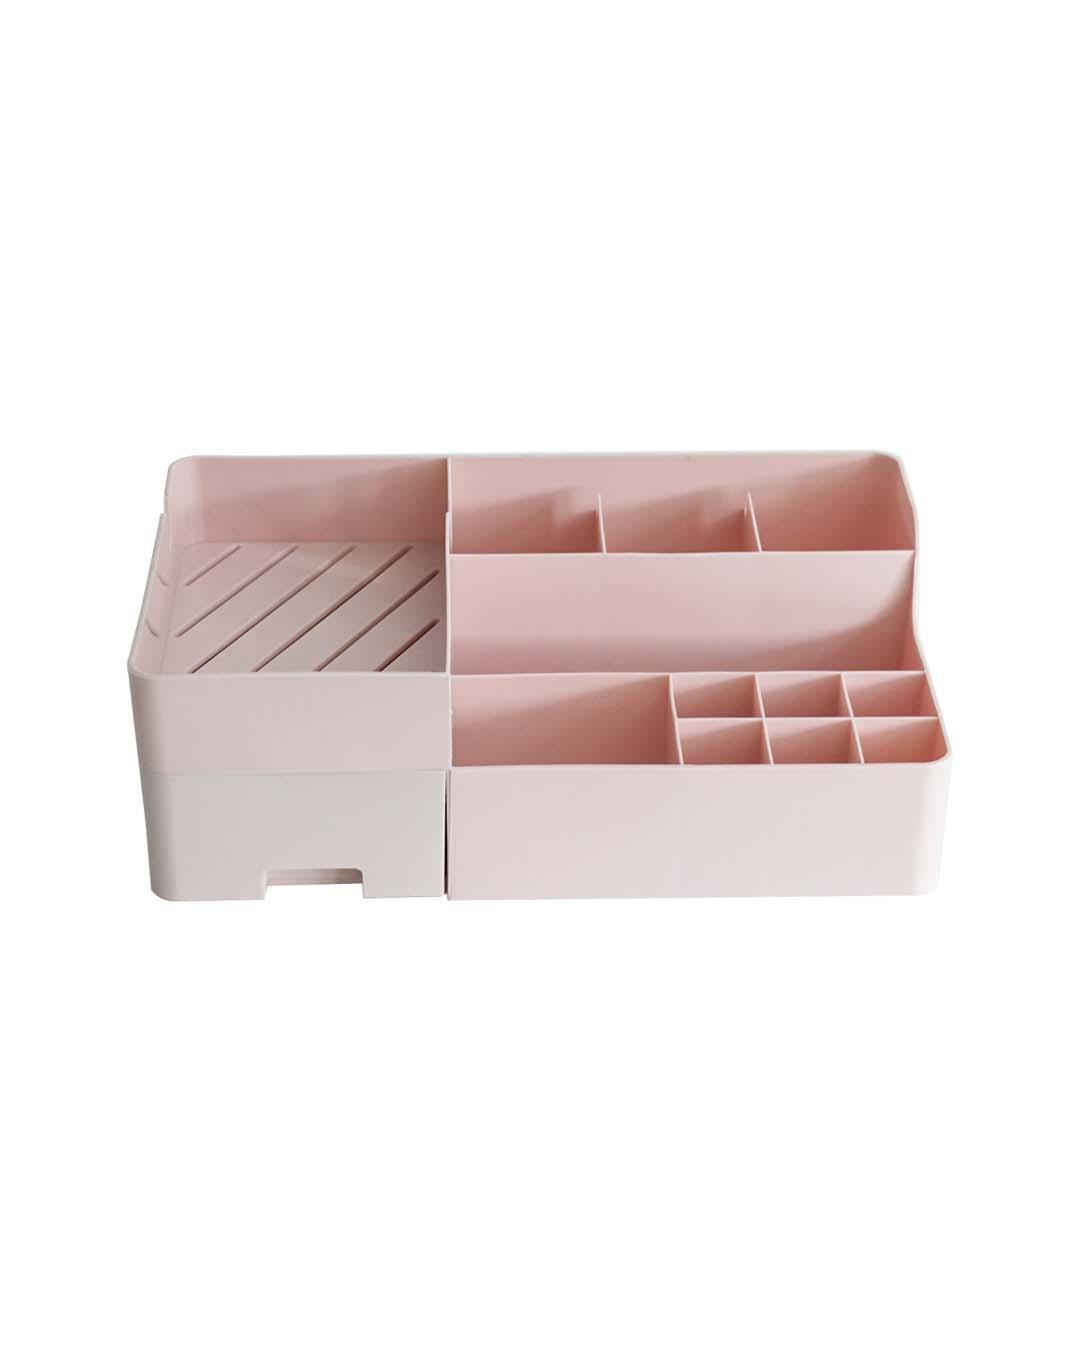 Table Organiser, Multiple Sections, Pink, Plastic - MARKET 99